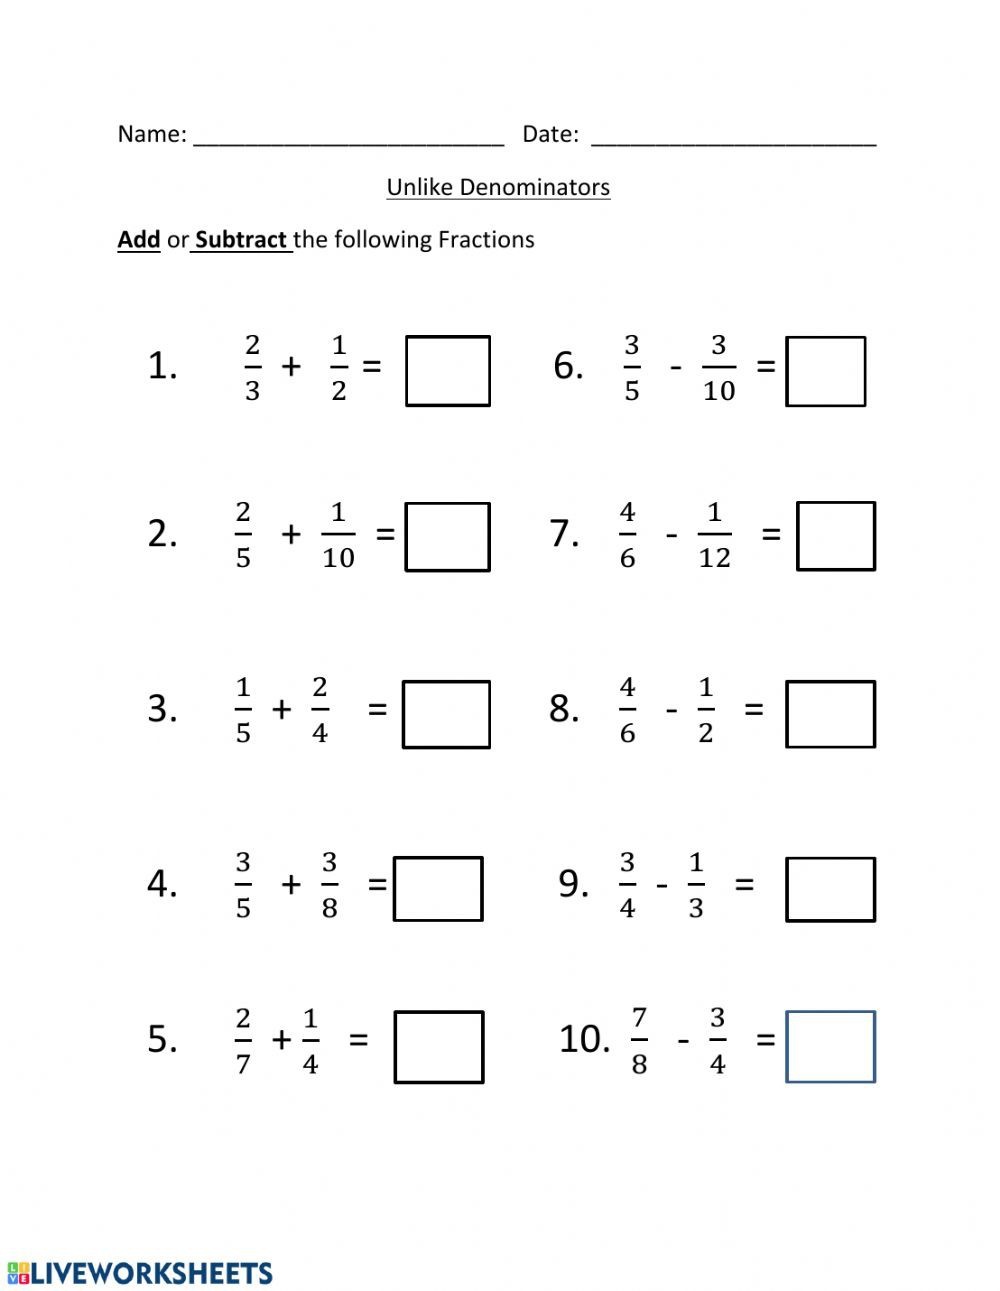 subtracting-mixed-numbers-worksheet-2-subtracting-fractions-with-unlike-denominators-worksheet